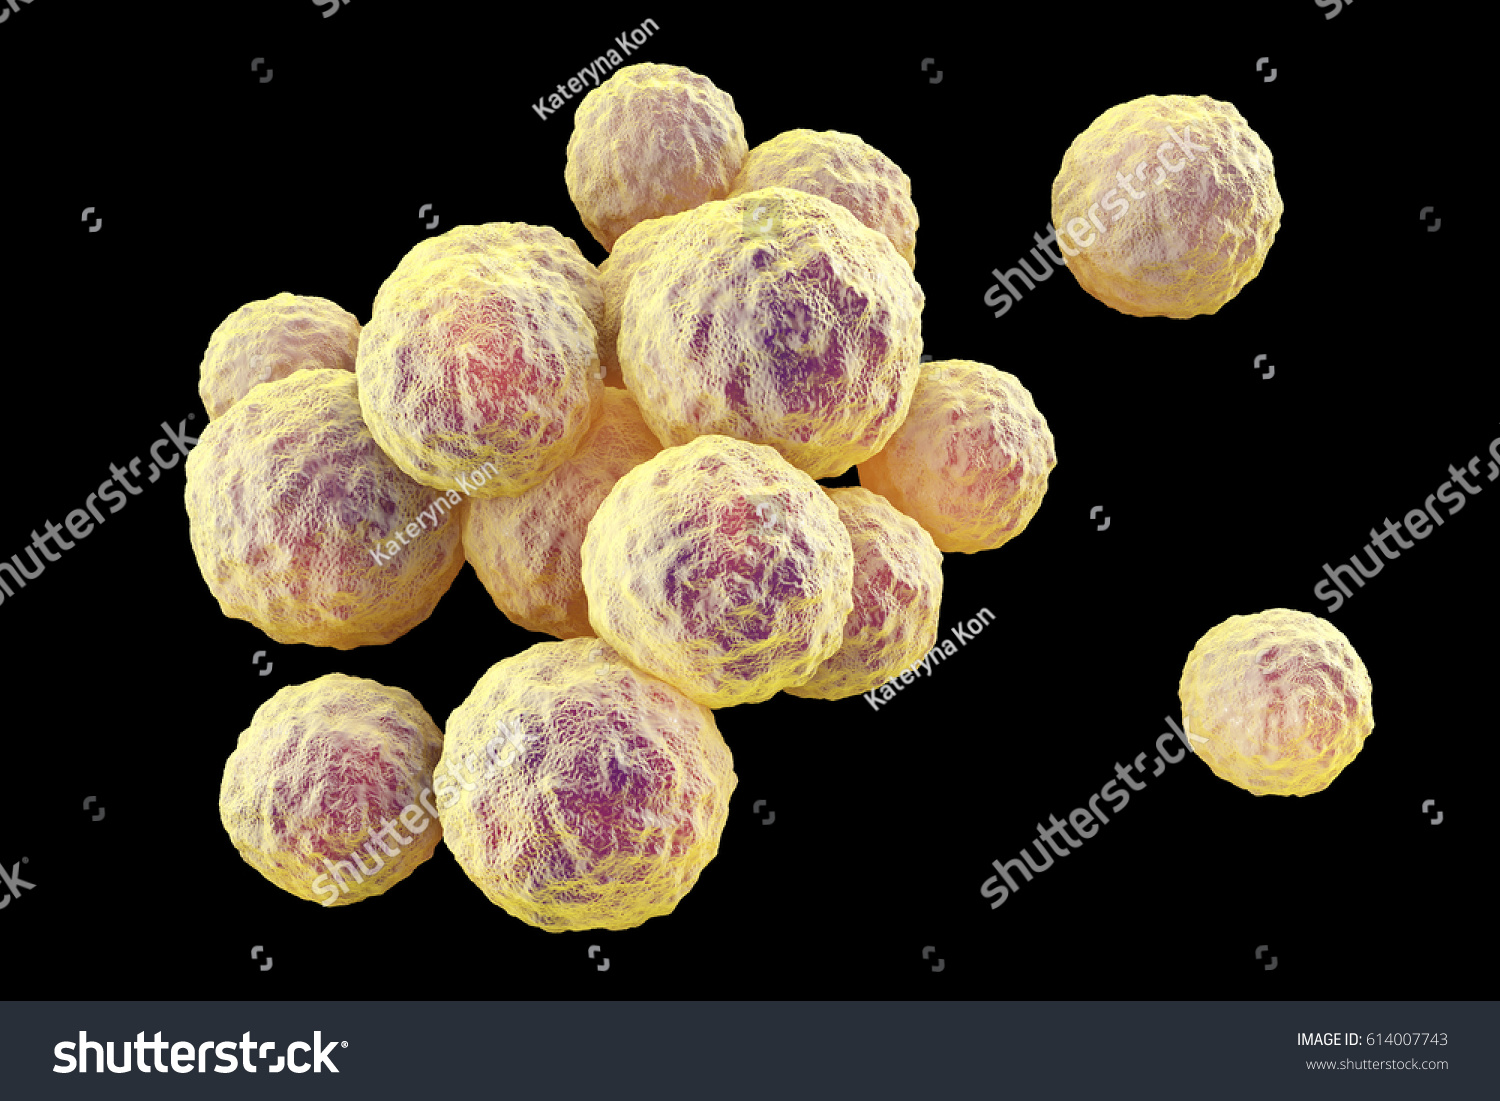 Bacteria Methicillinresistant Staphylococcus Aureus Mrsa Multidrug Ilustración De Stock 614007743 0167